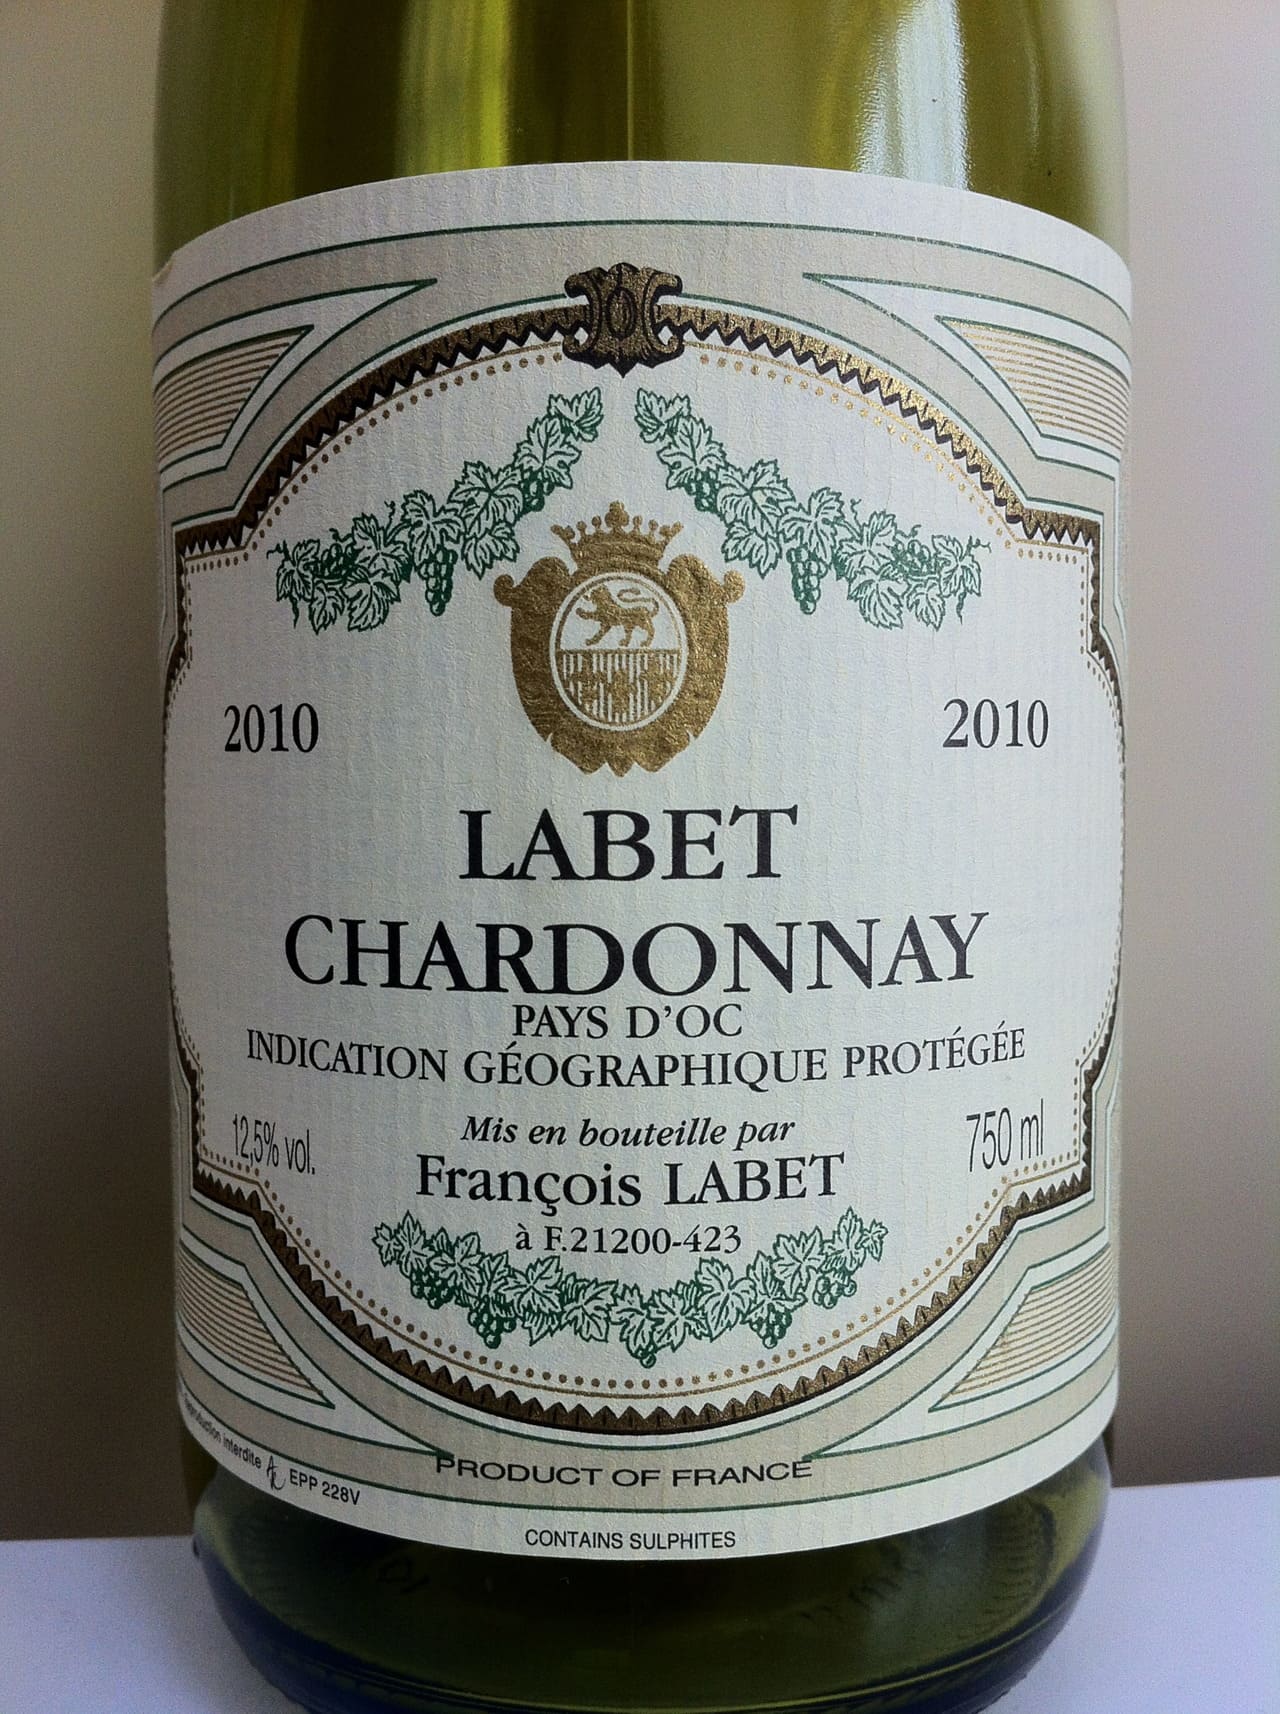 François Labet Chardonnay